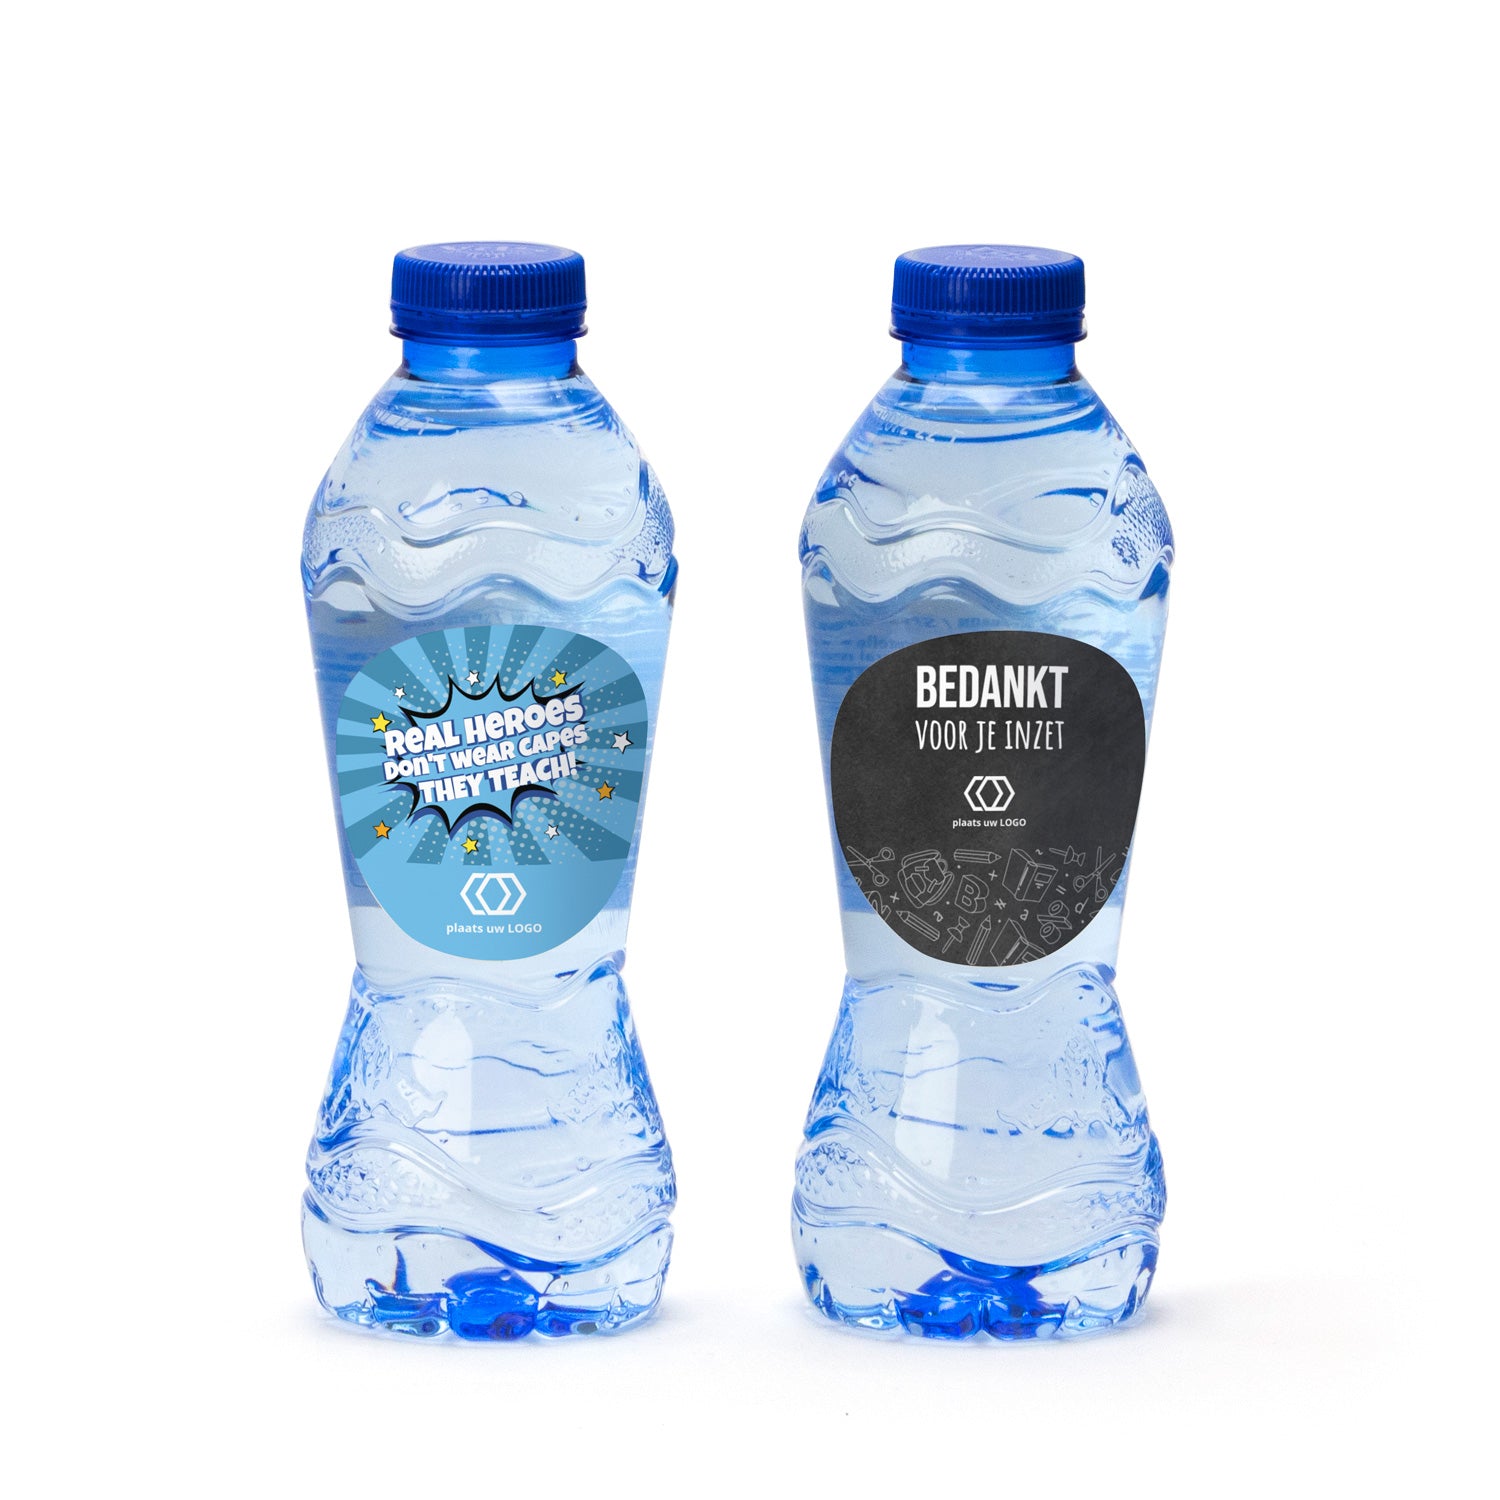 Flesje water met eigen etiket - Leraar - Bedankjes.nl